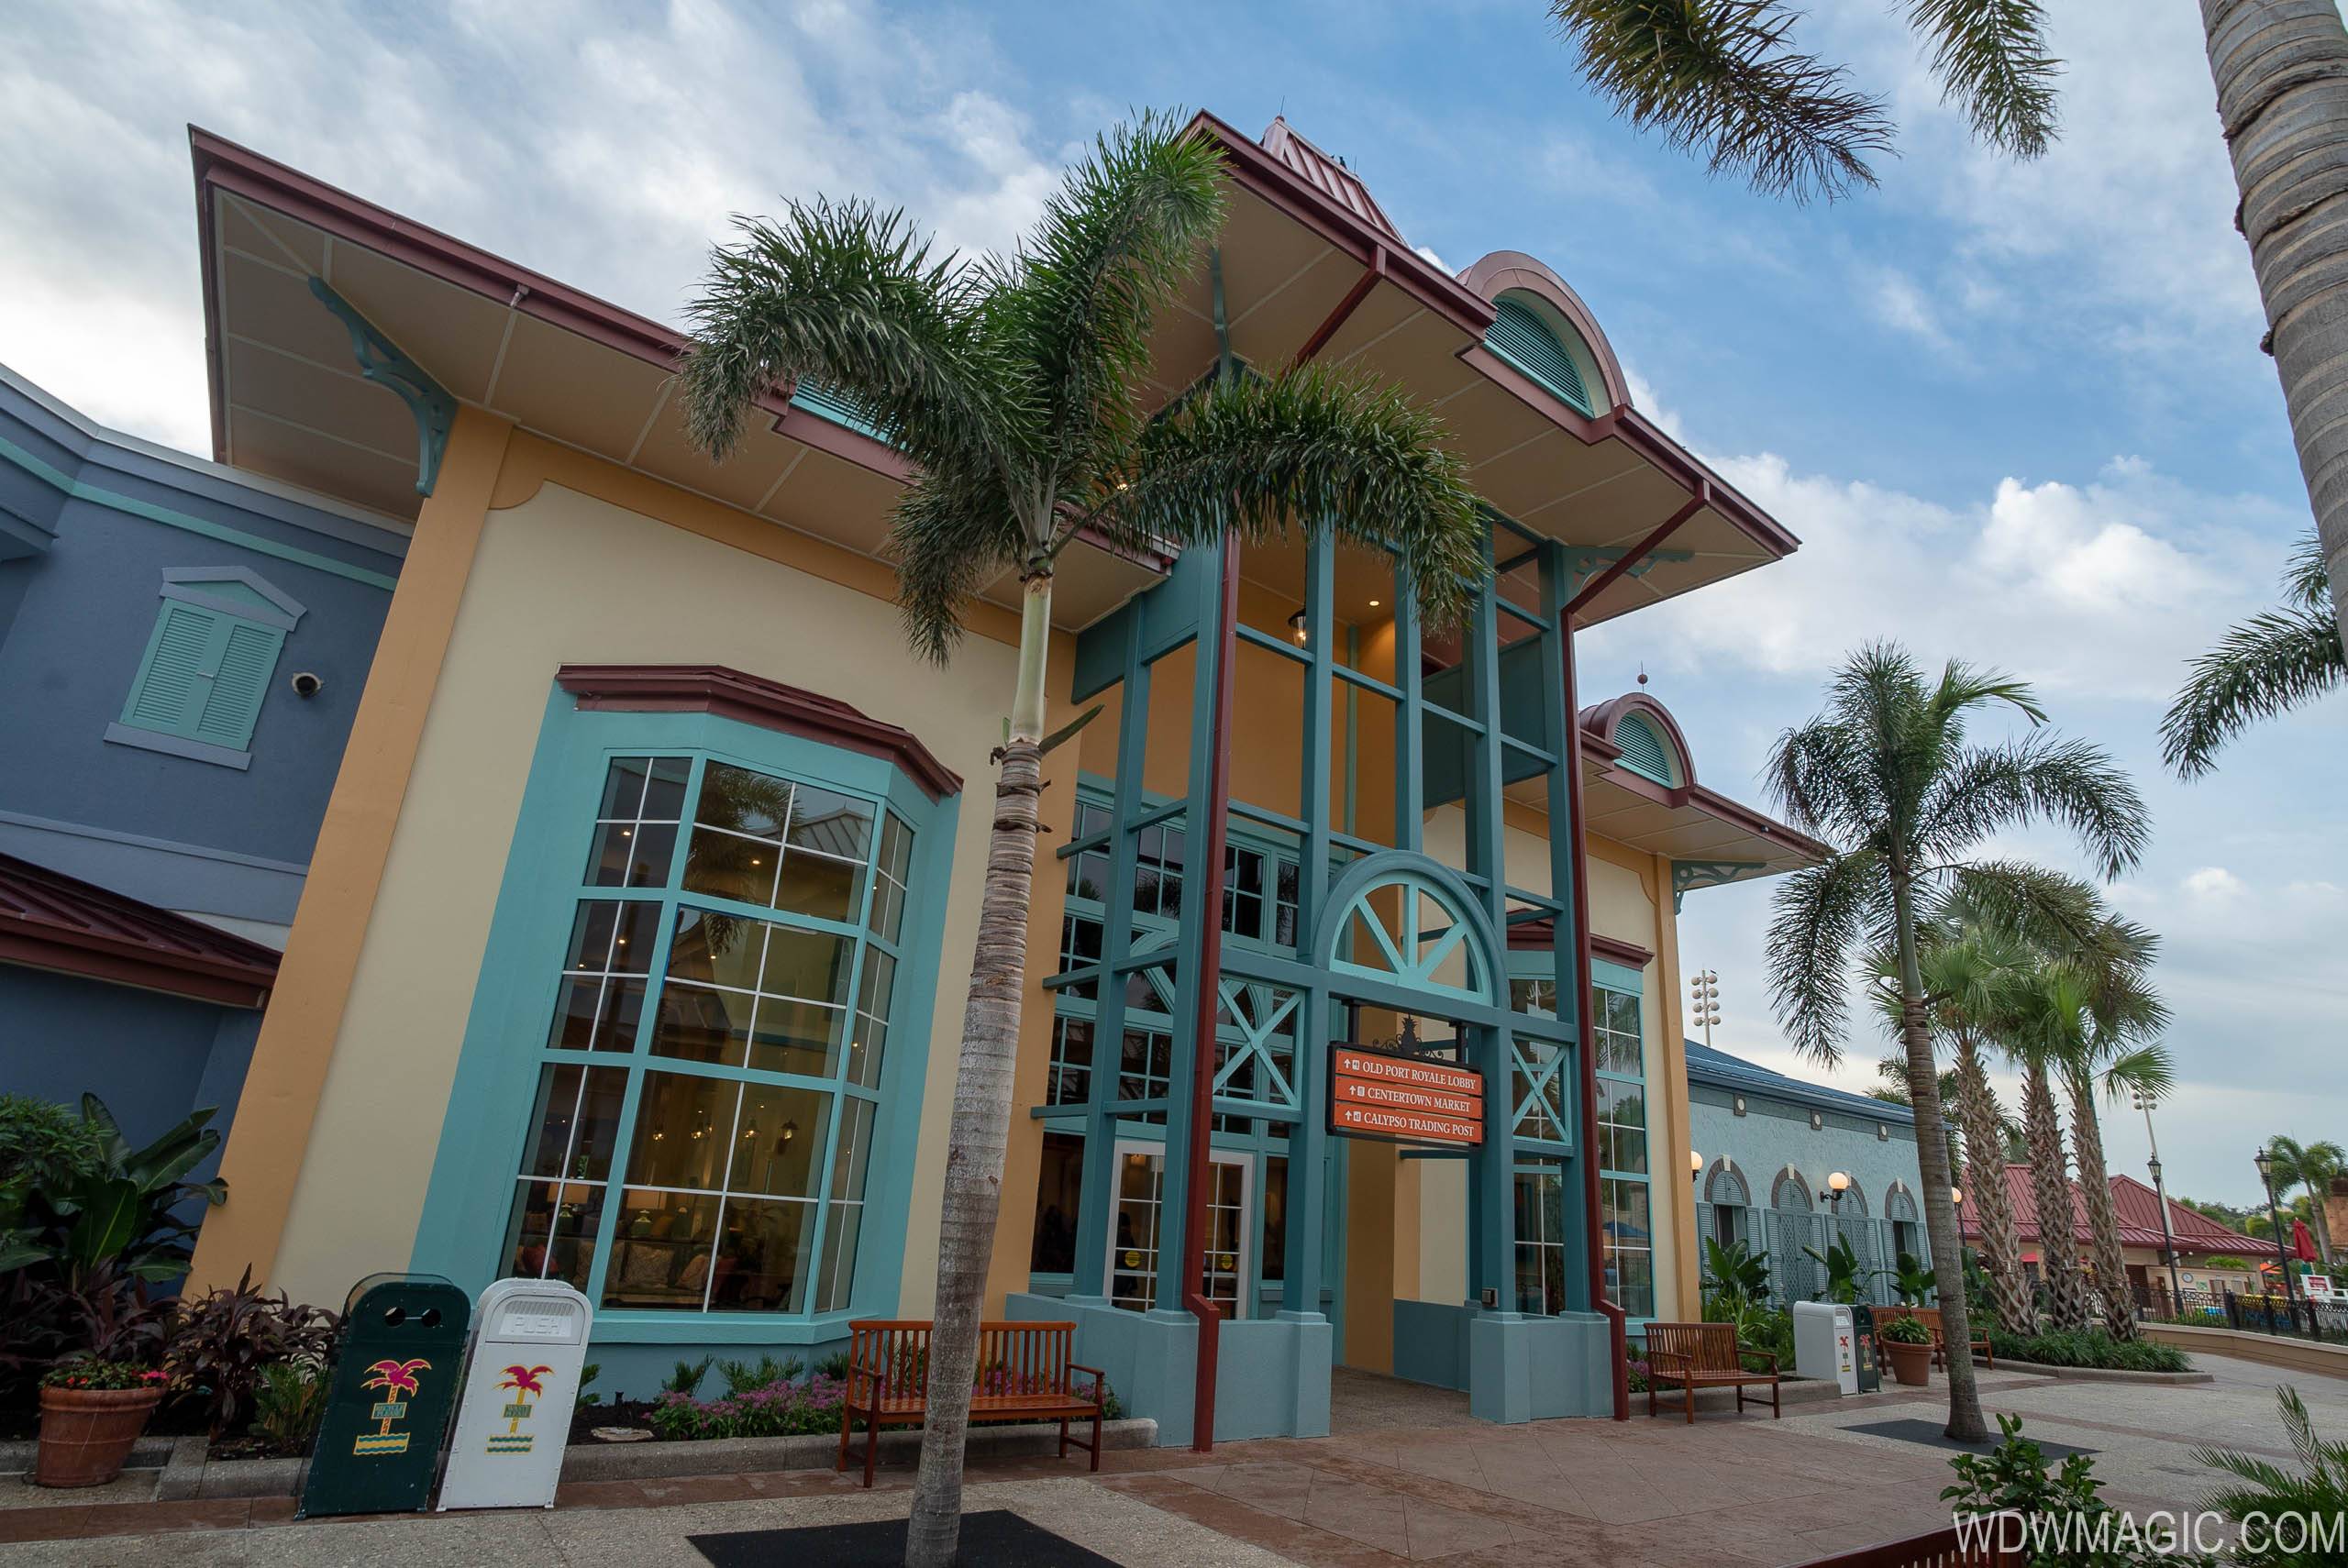 New look Caribbean Beach Resort food court opens